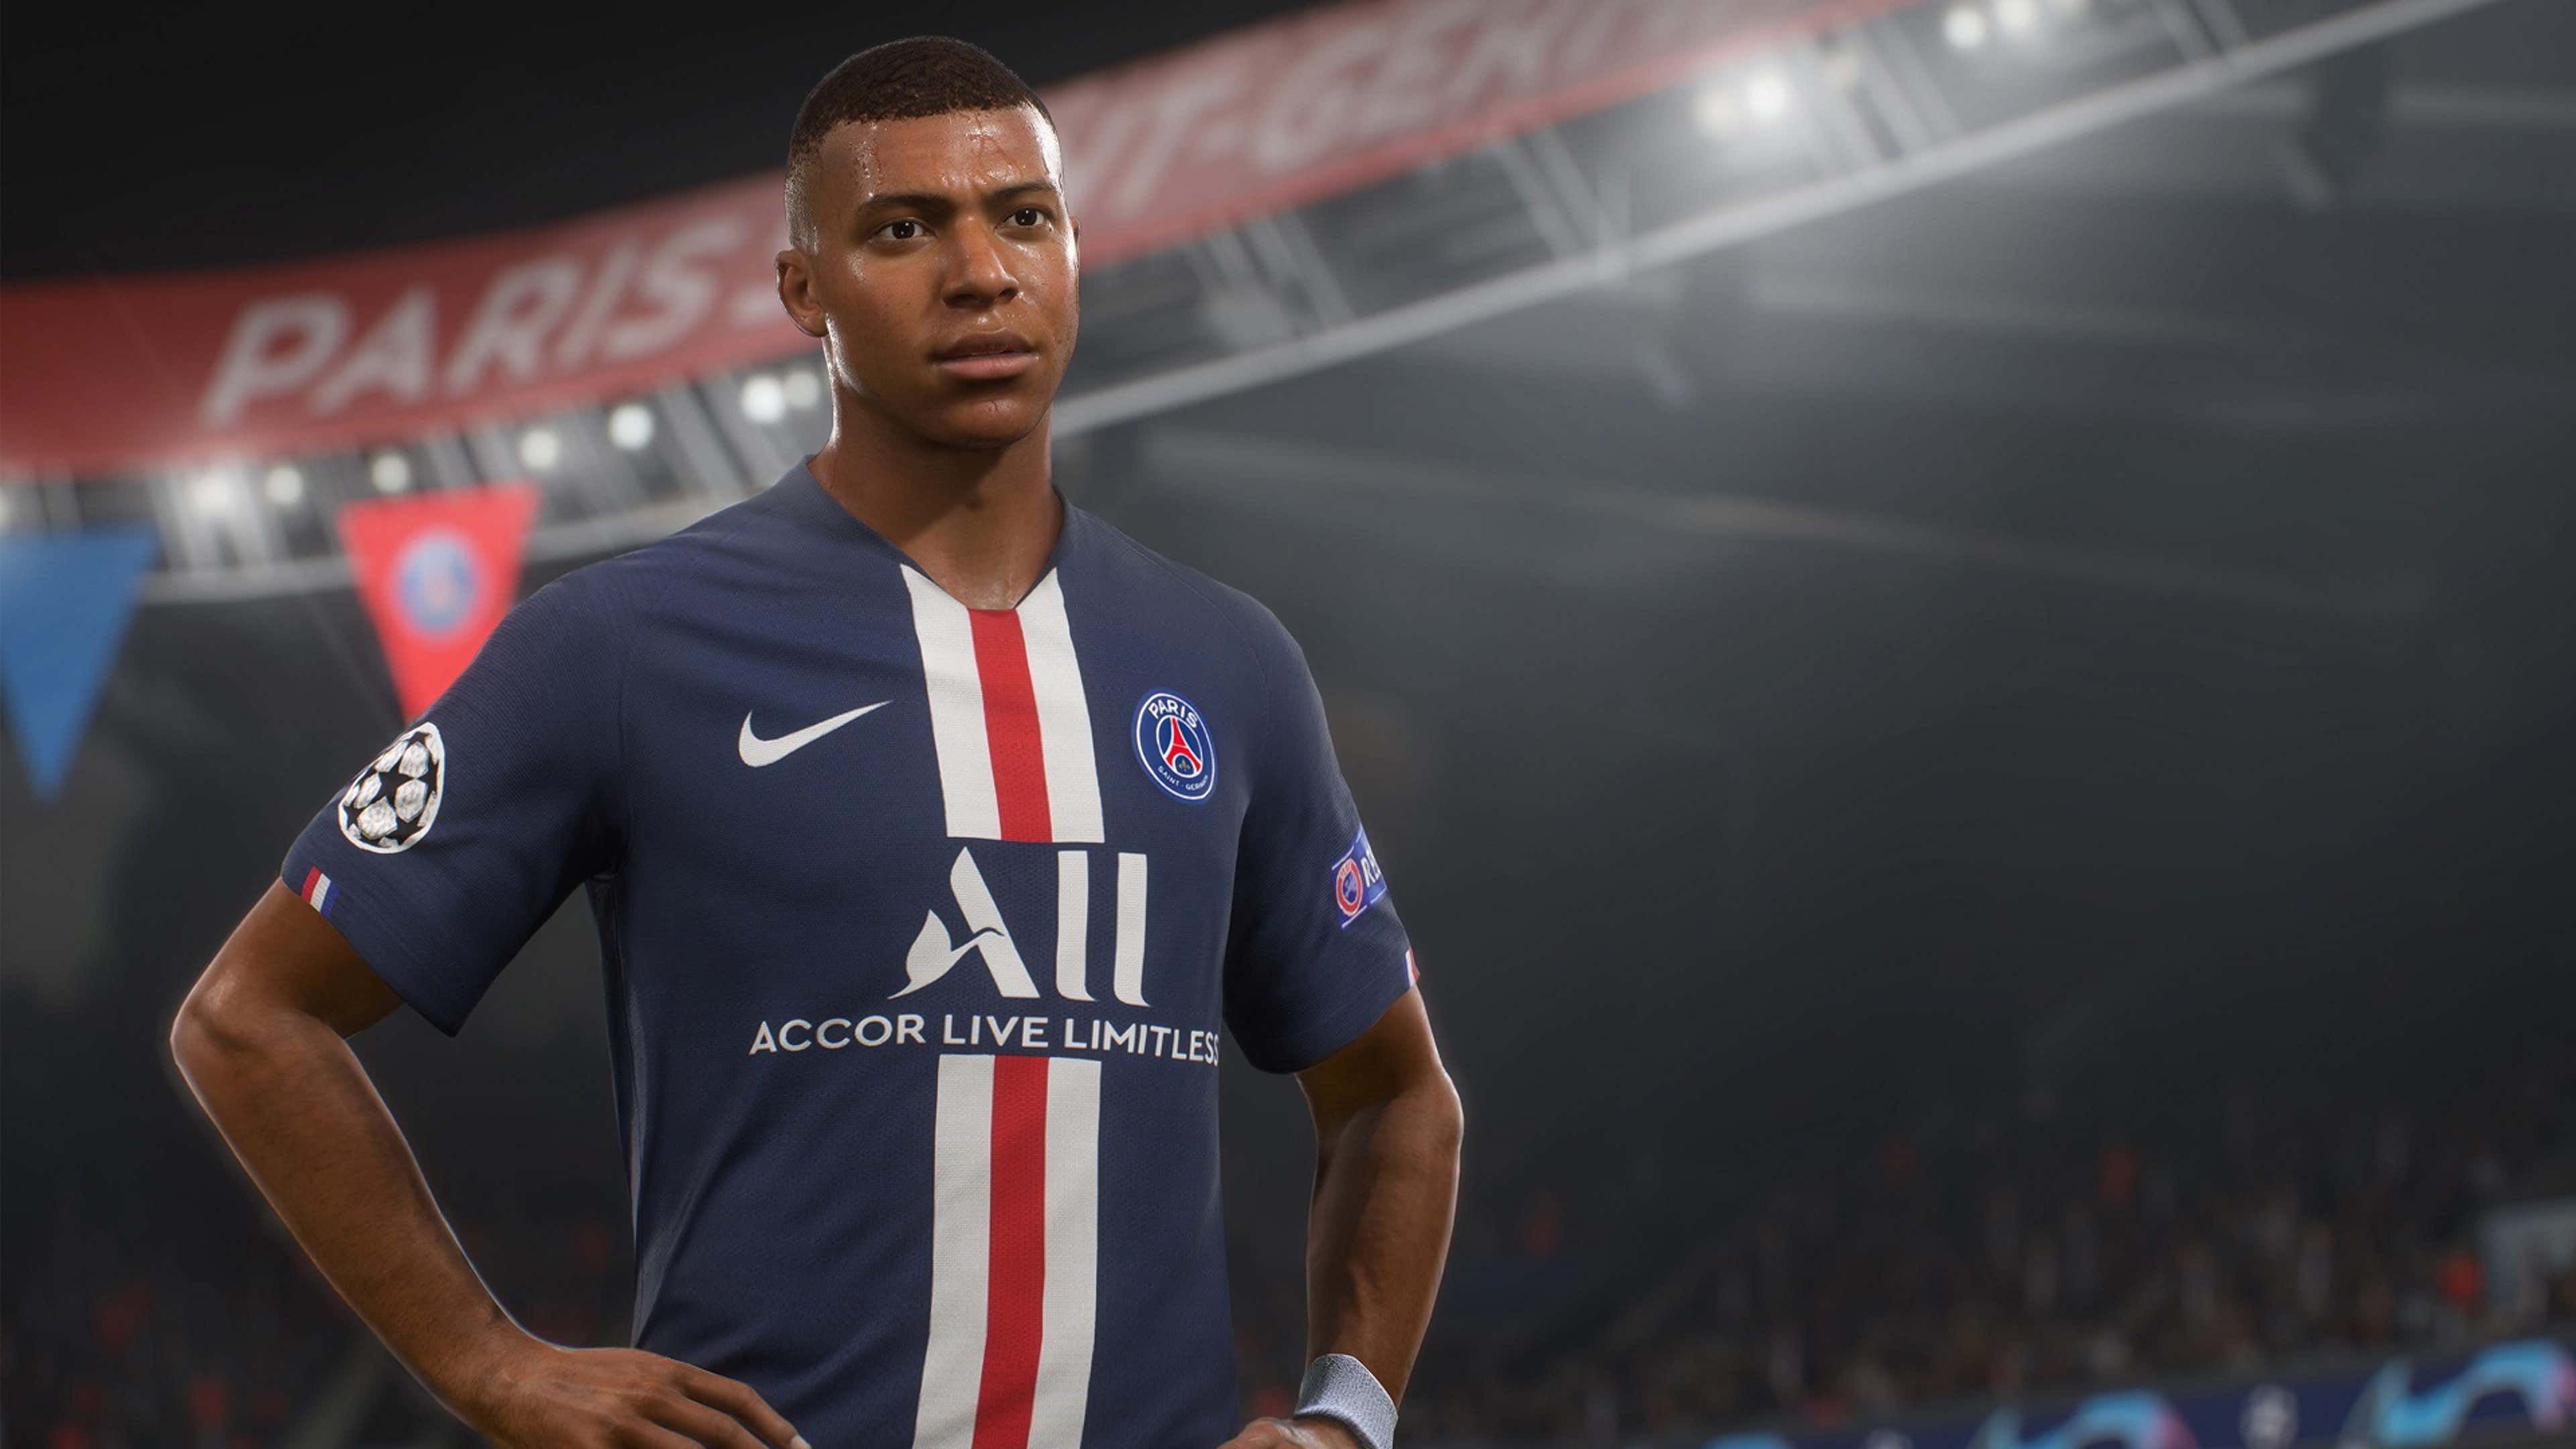 FIFA 21: release date, demo details, Ultimate Team web app, price